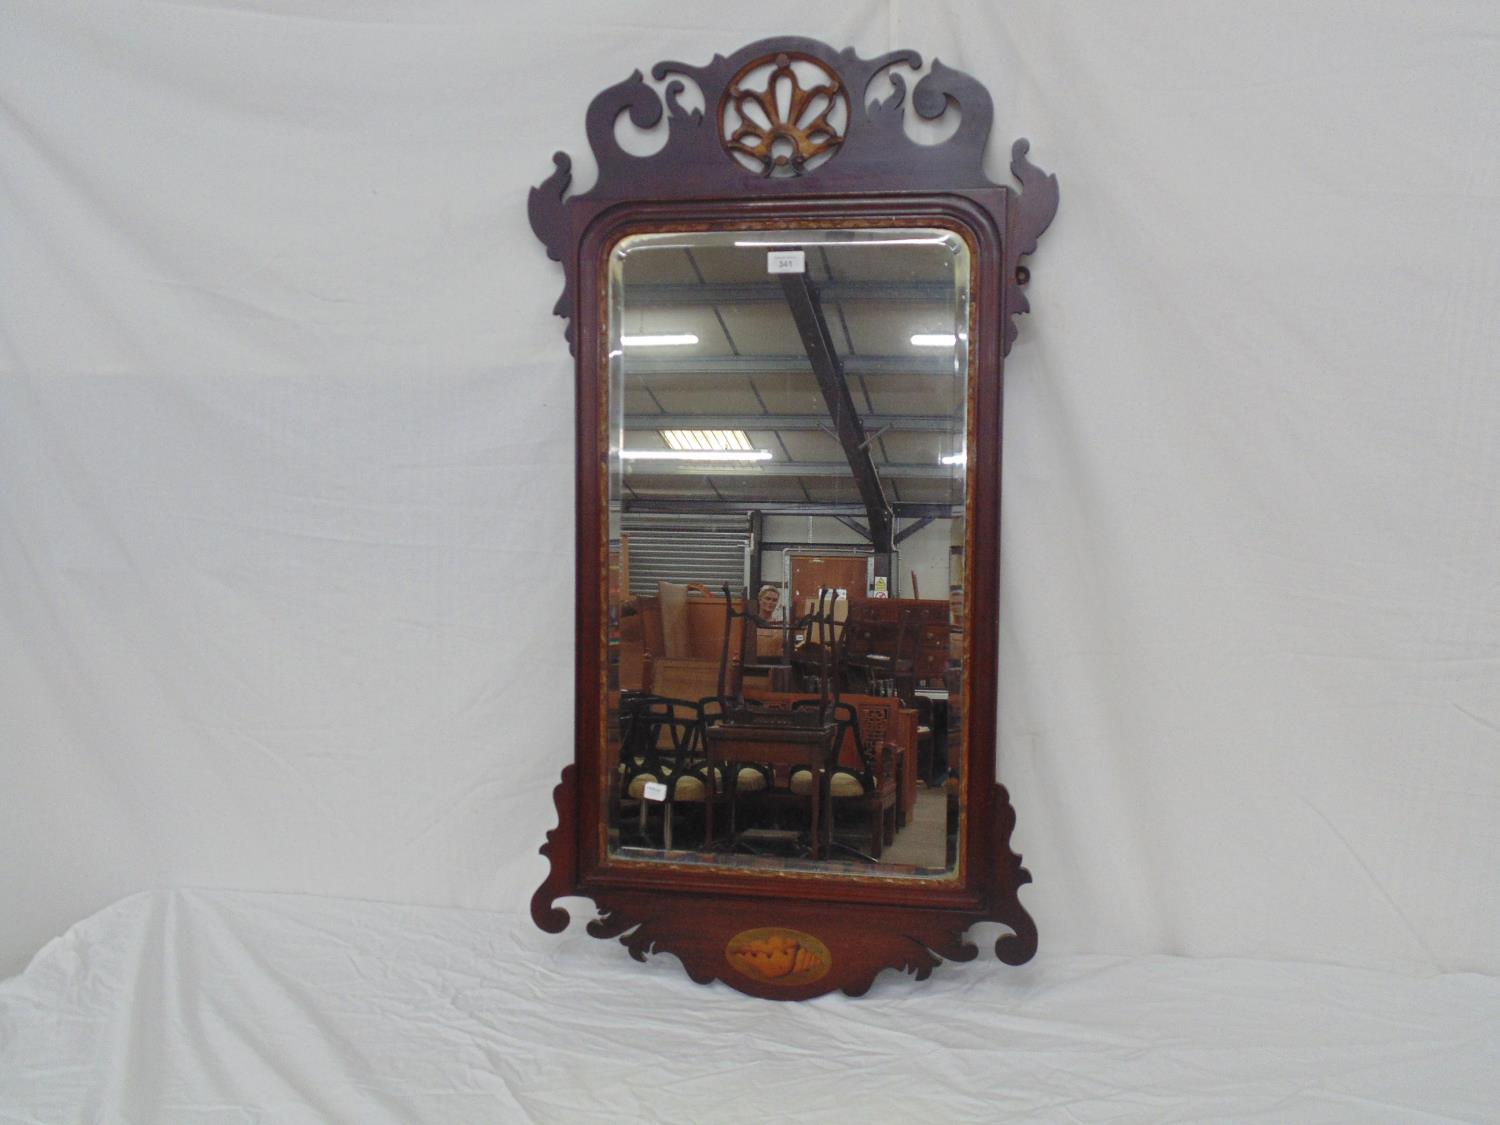 Mahogany bevel edge mirror having fretwork frame with shell decoration - 106cm x 56cm (split to